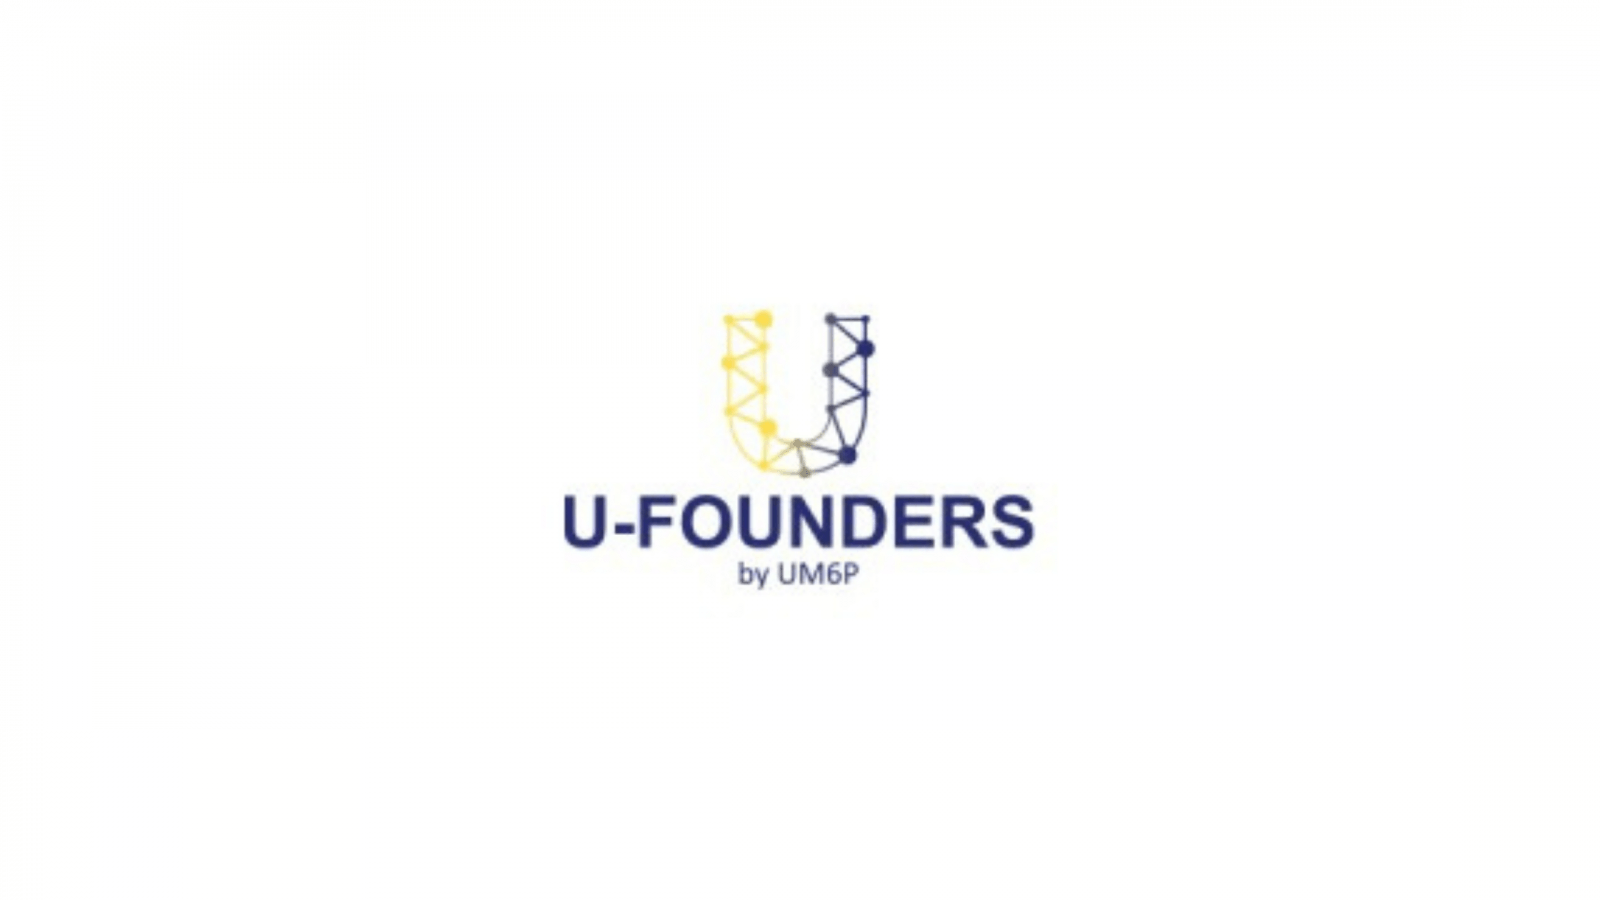 U-Founders by UM6P